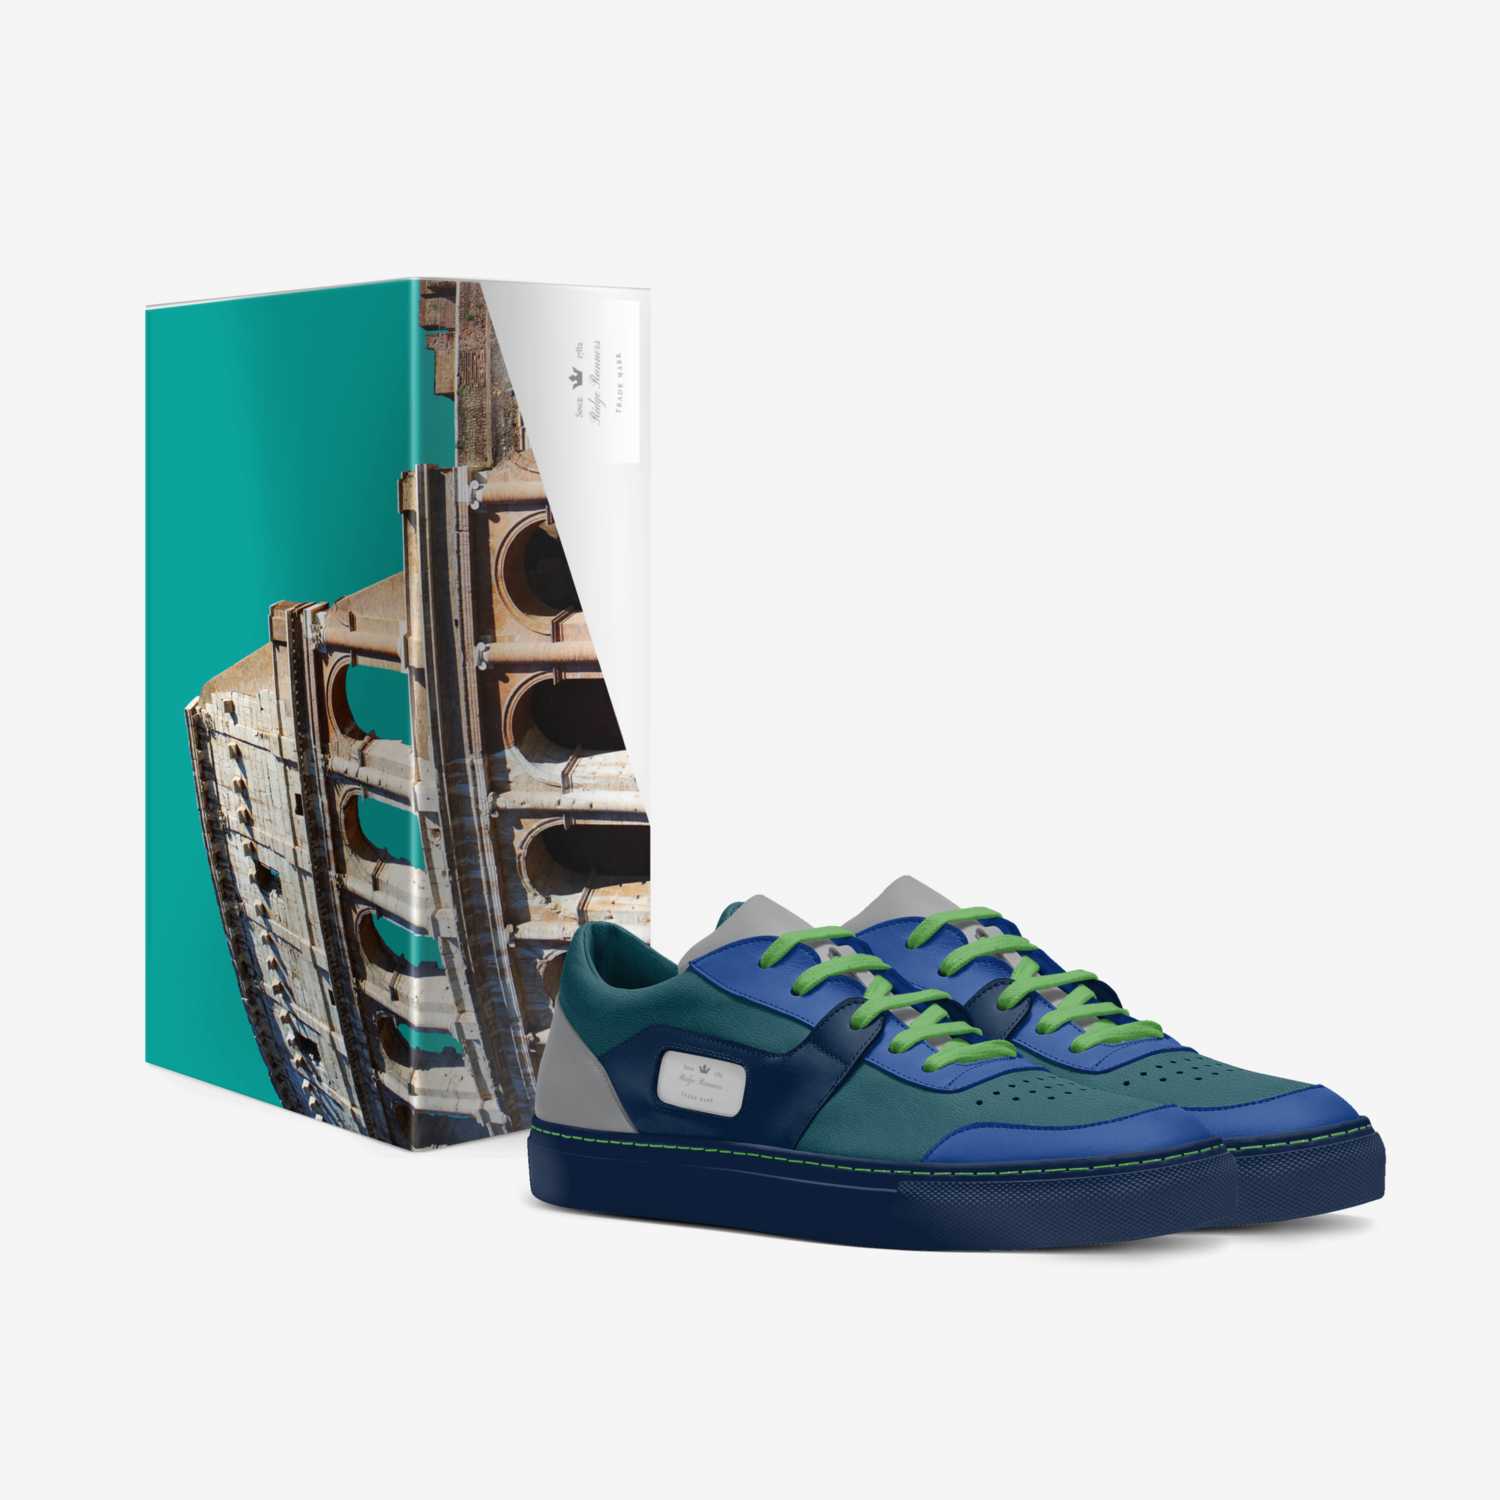 Ridge Runners custom made in Italy shoes by Matthew Dias | Box view